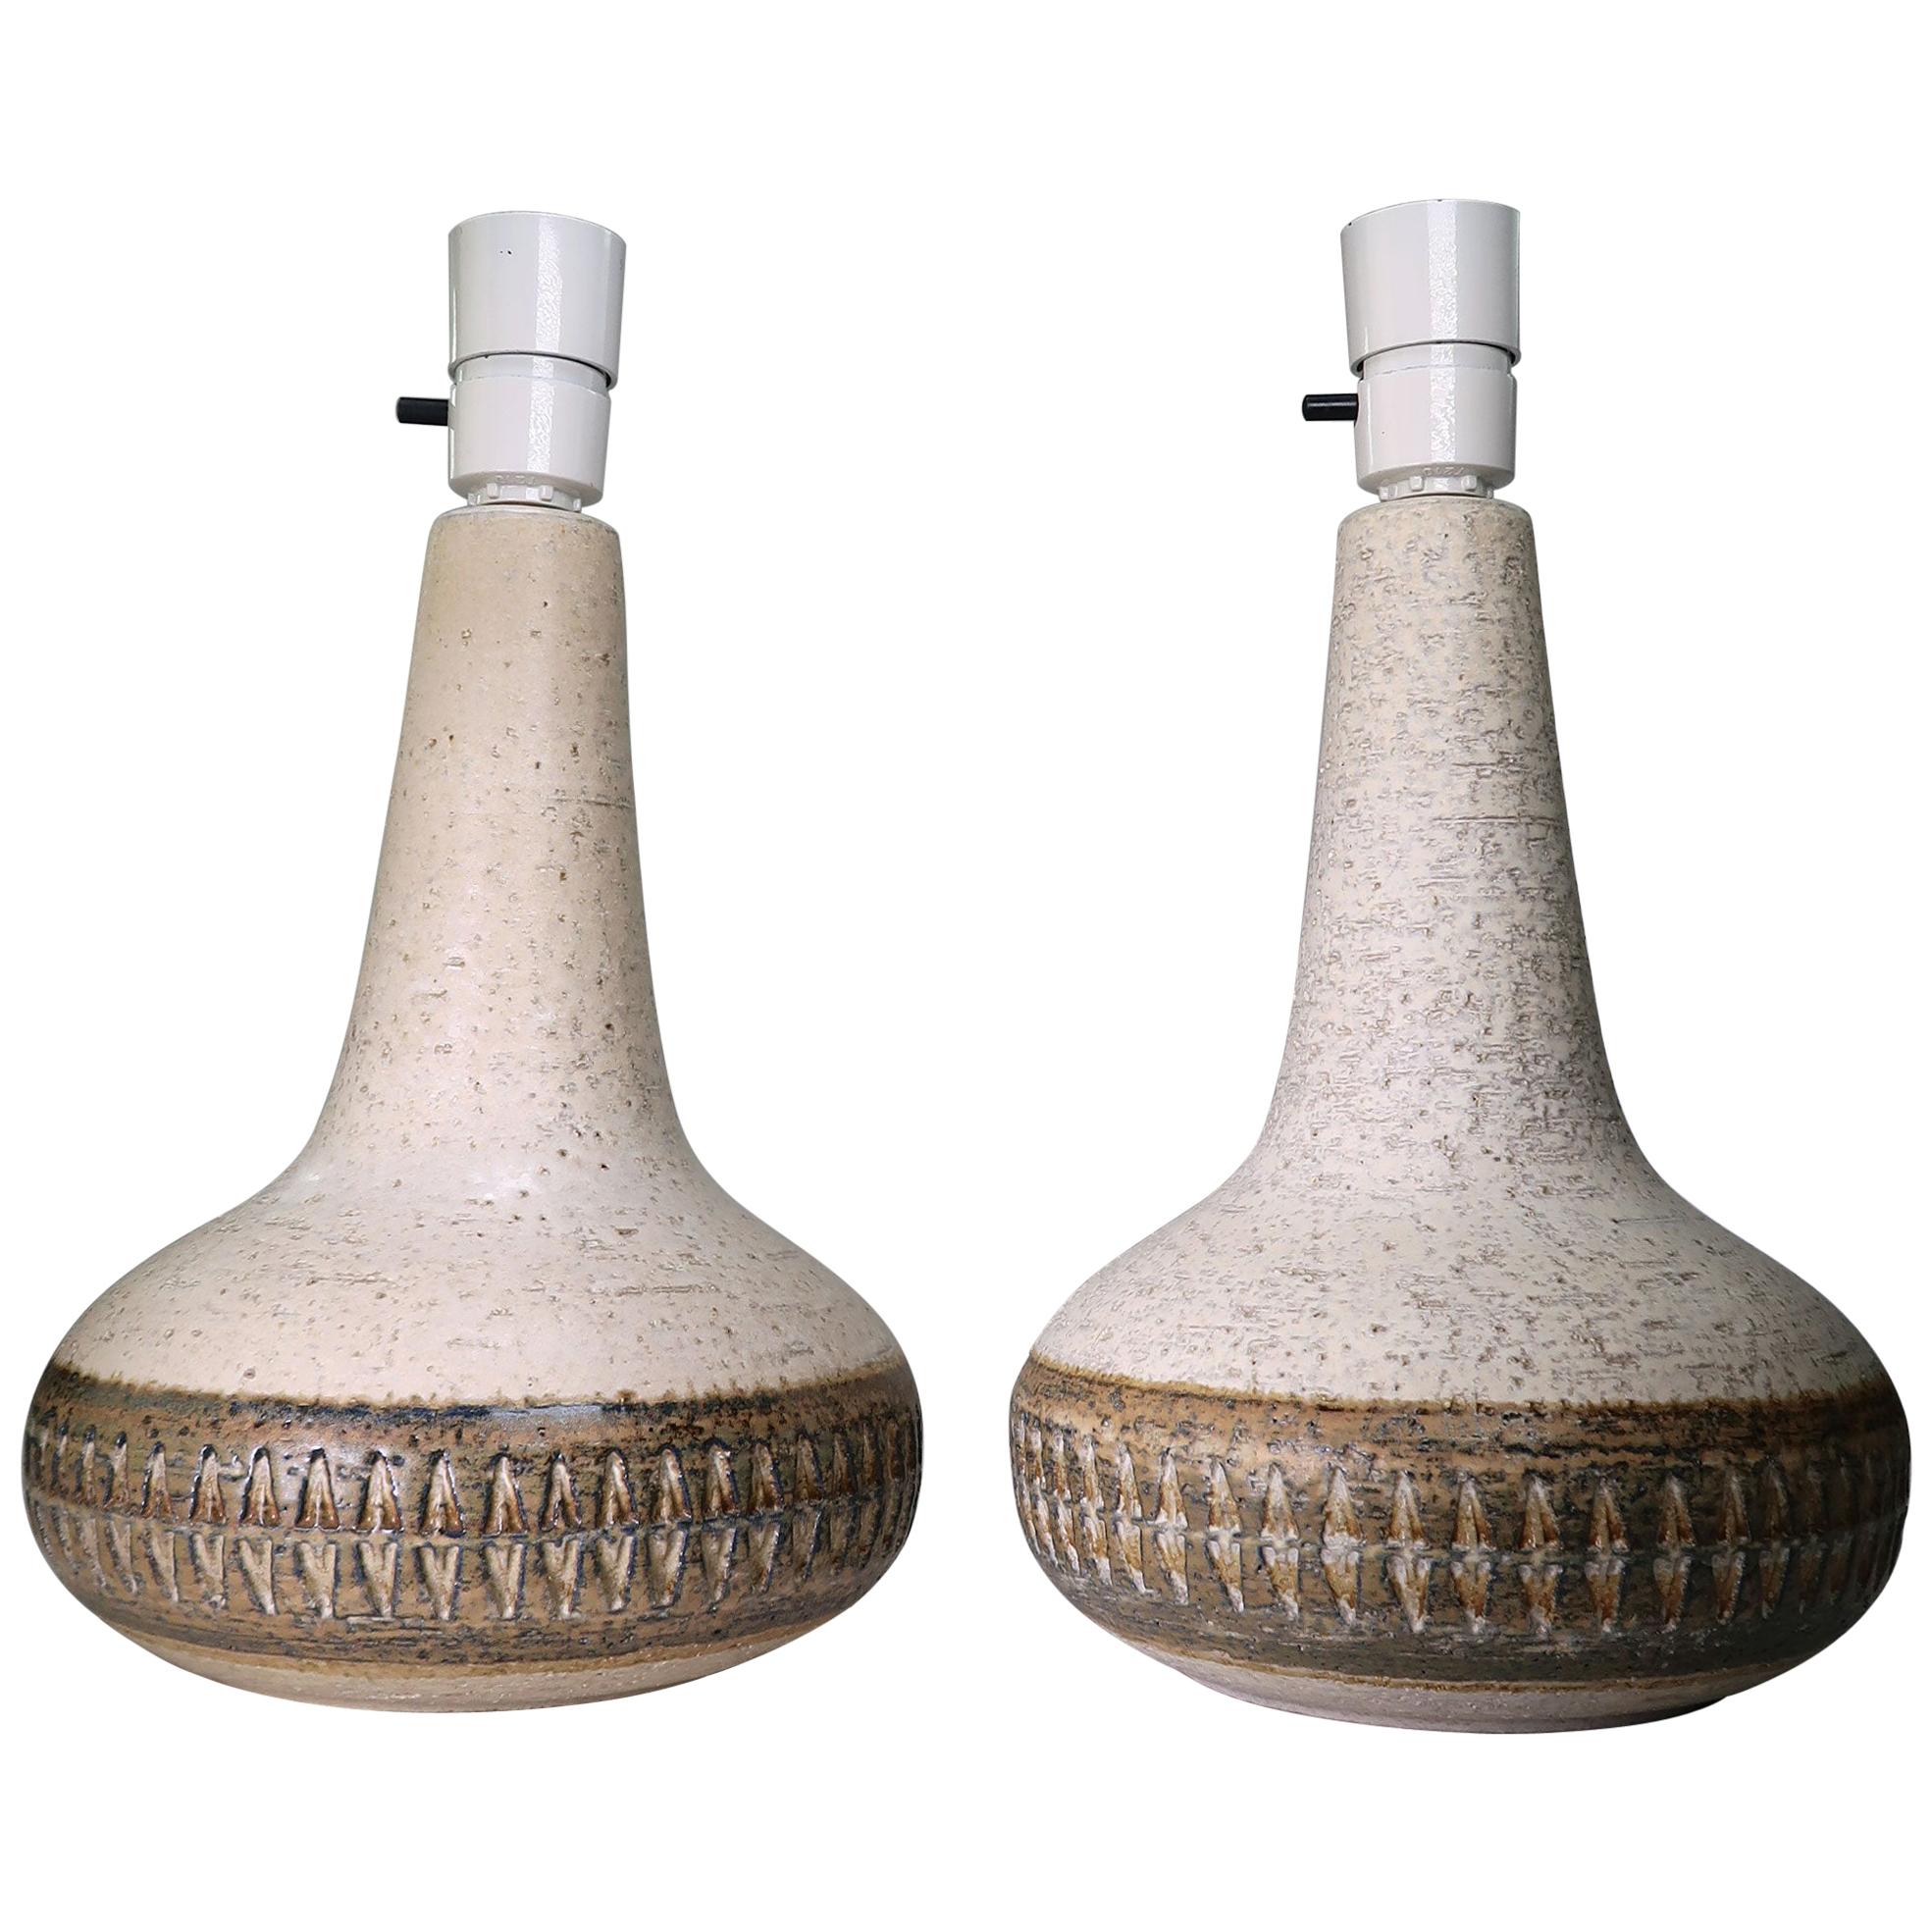 Søholm 1960s Handmade Danish Cream White, Brown Stoneware Table Lamps